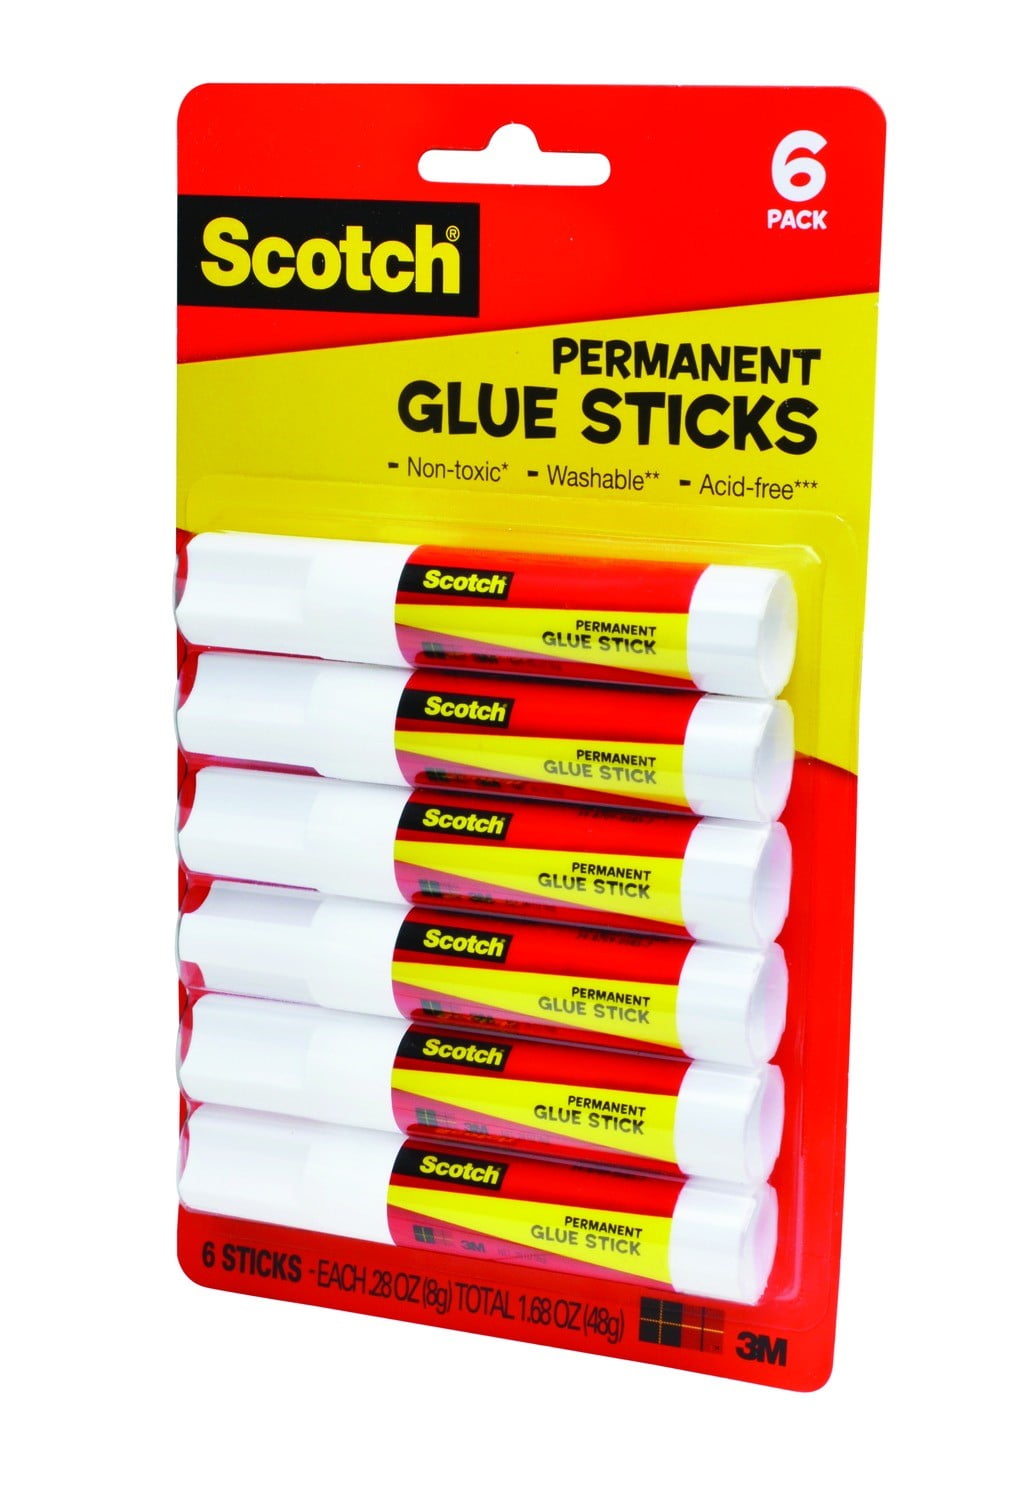 Scotch All Purpose Permanent Glue Stick, 0.28 oz, 6-Count